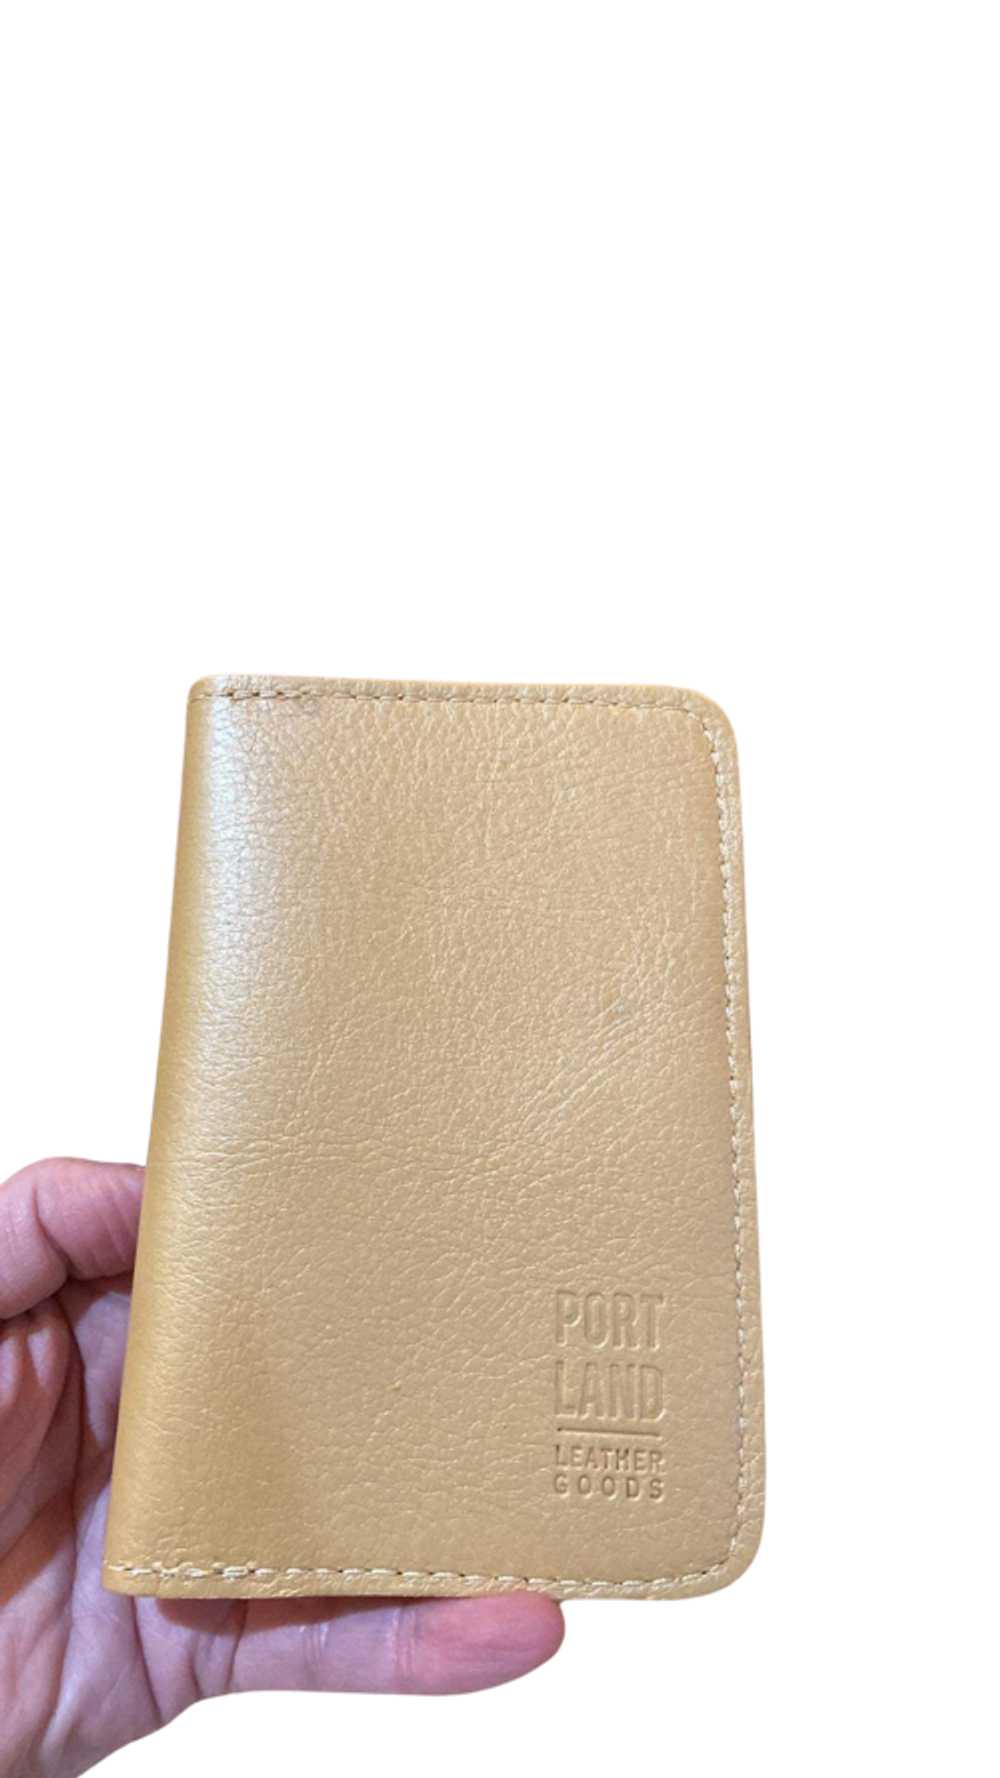 Portland Leather Leather Modern Passport Holder - image 2